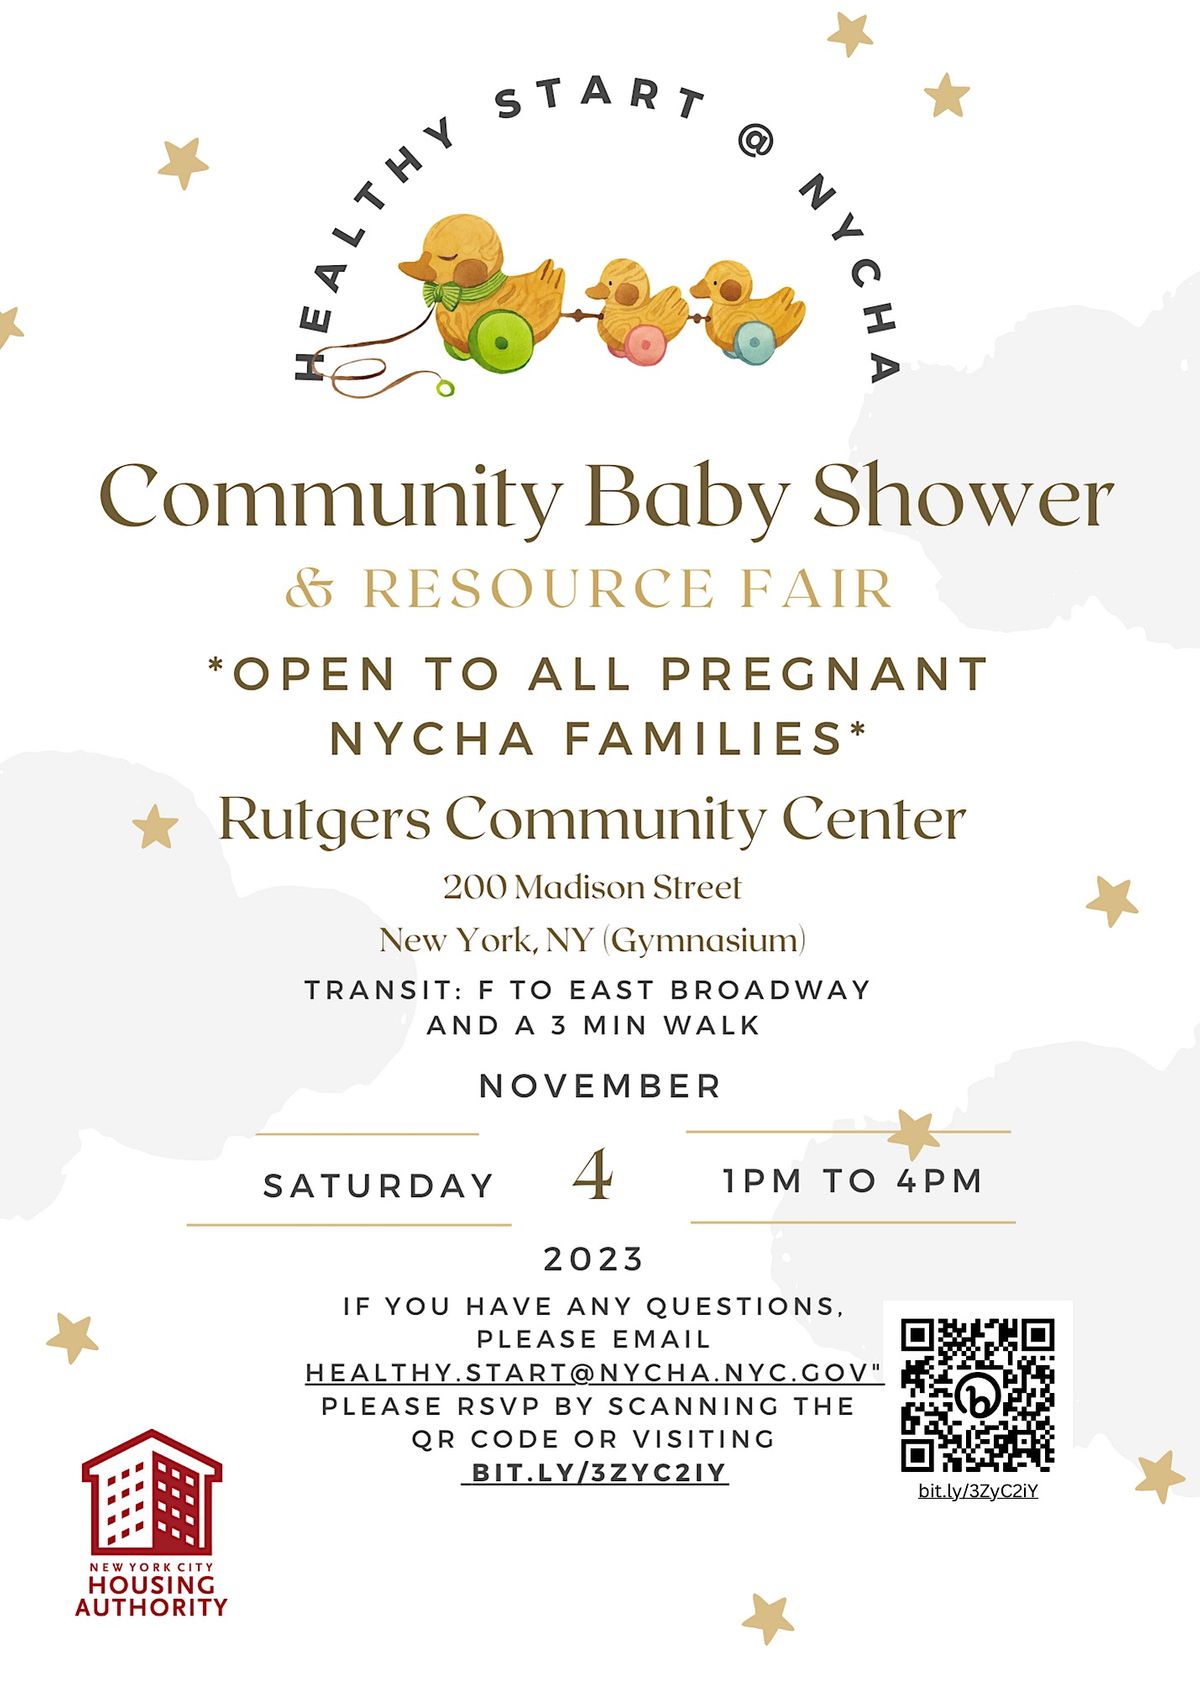 NYCHA Resource Fair Community Baby Shower